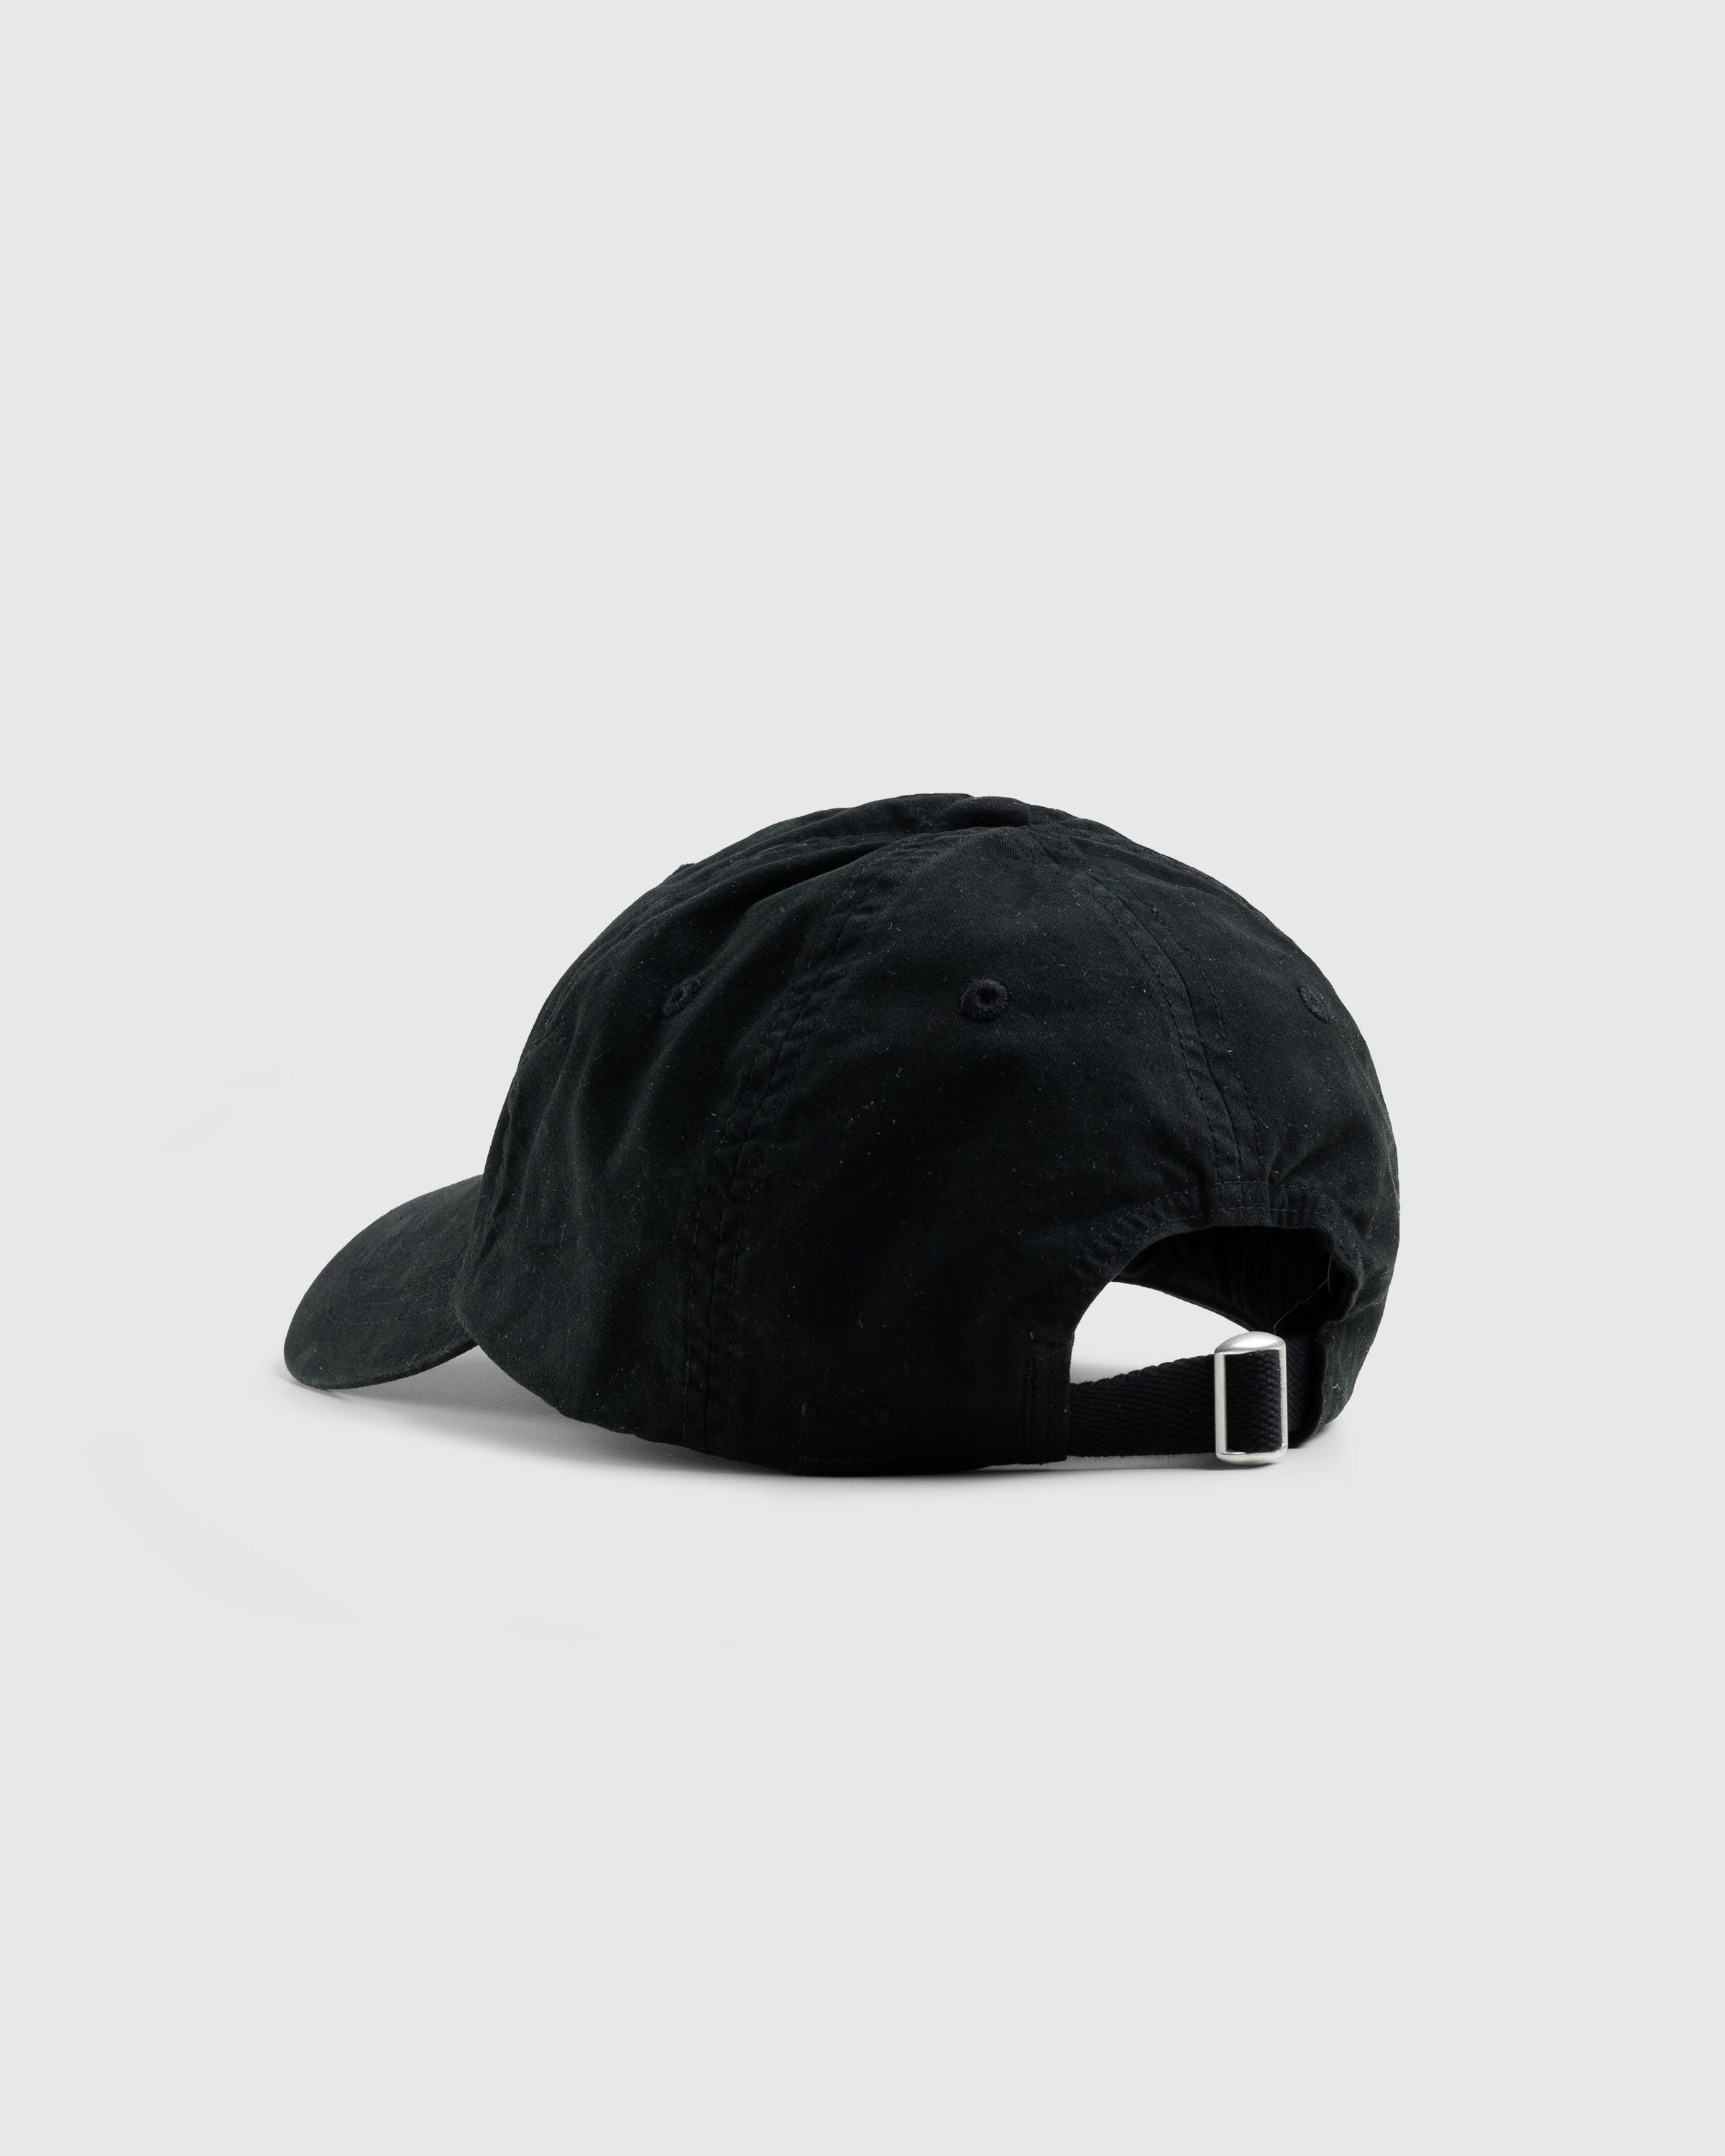 Acne Studios – Face Patch Baseball Cap Black - Hats - Black - Image 3